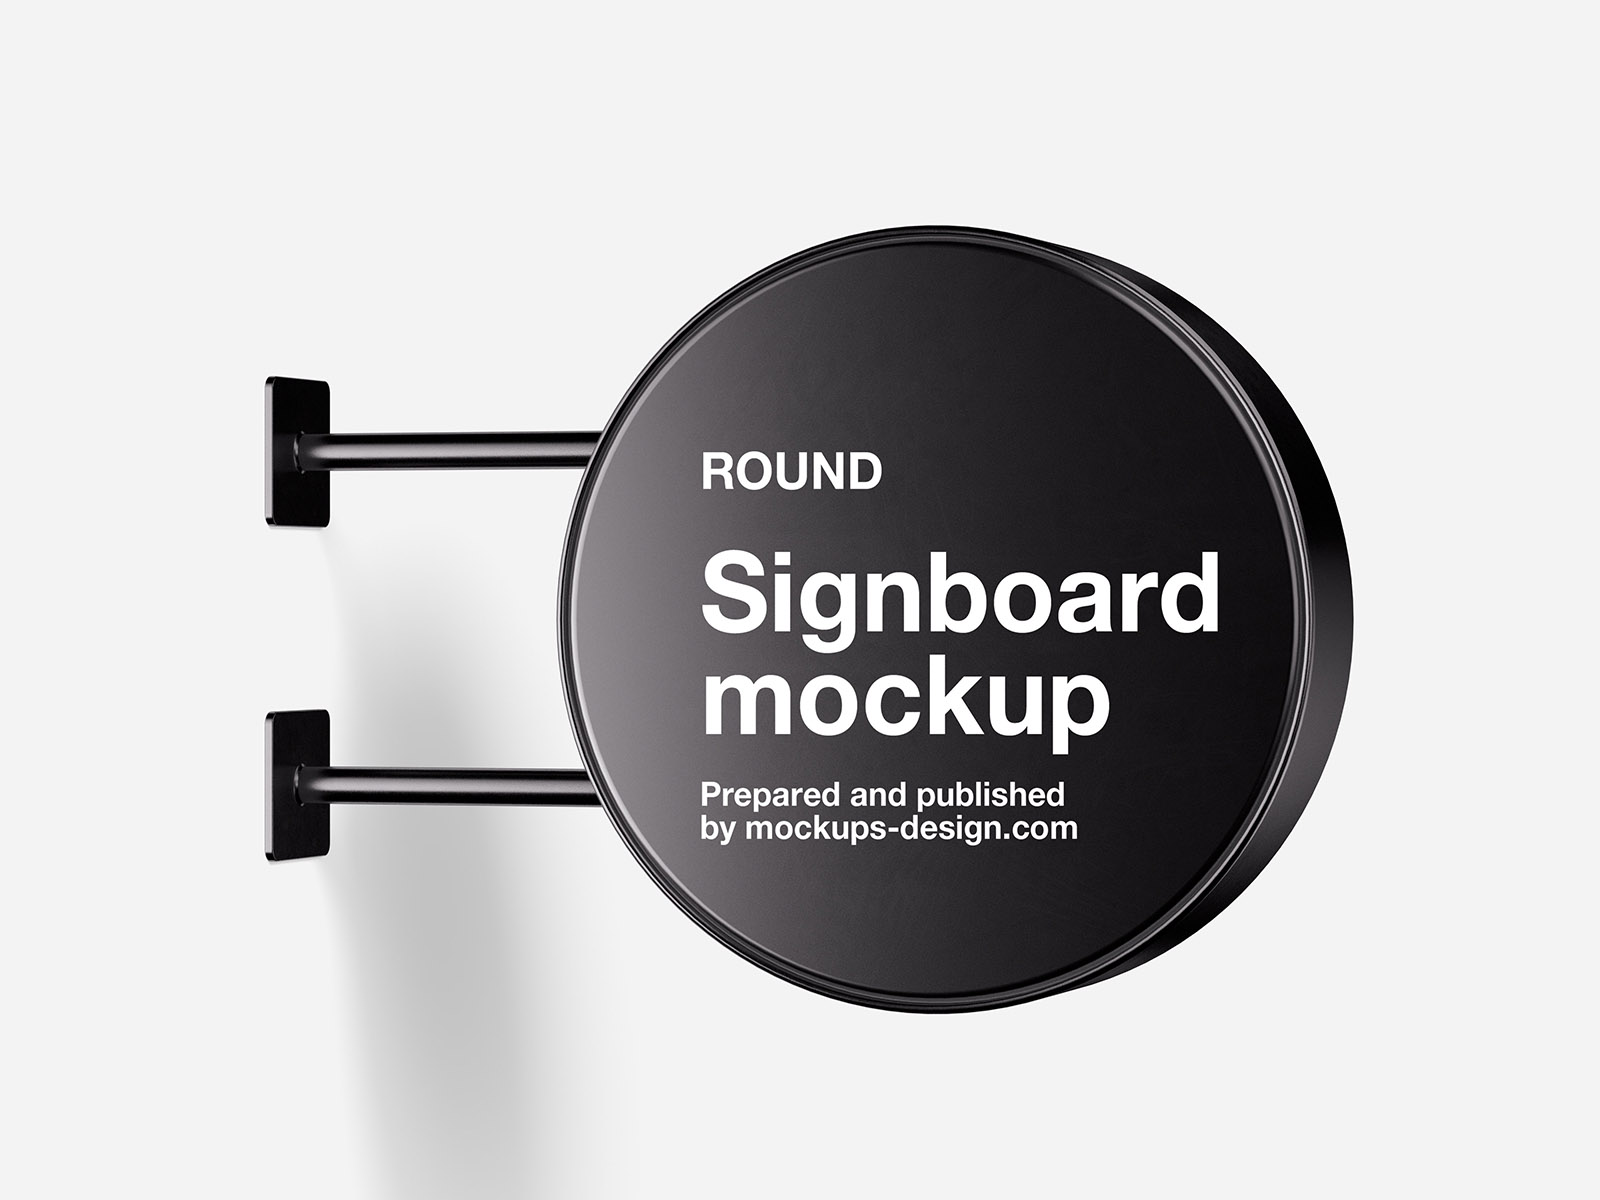 Round signboard mockup